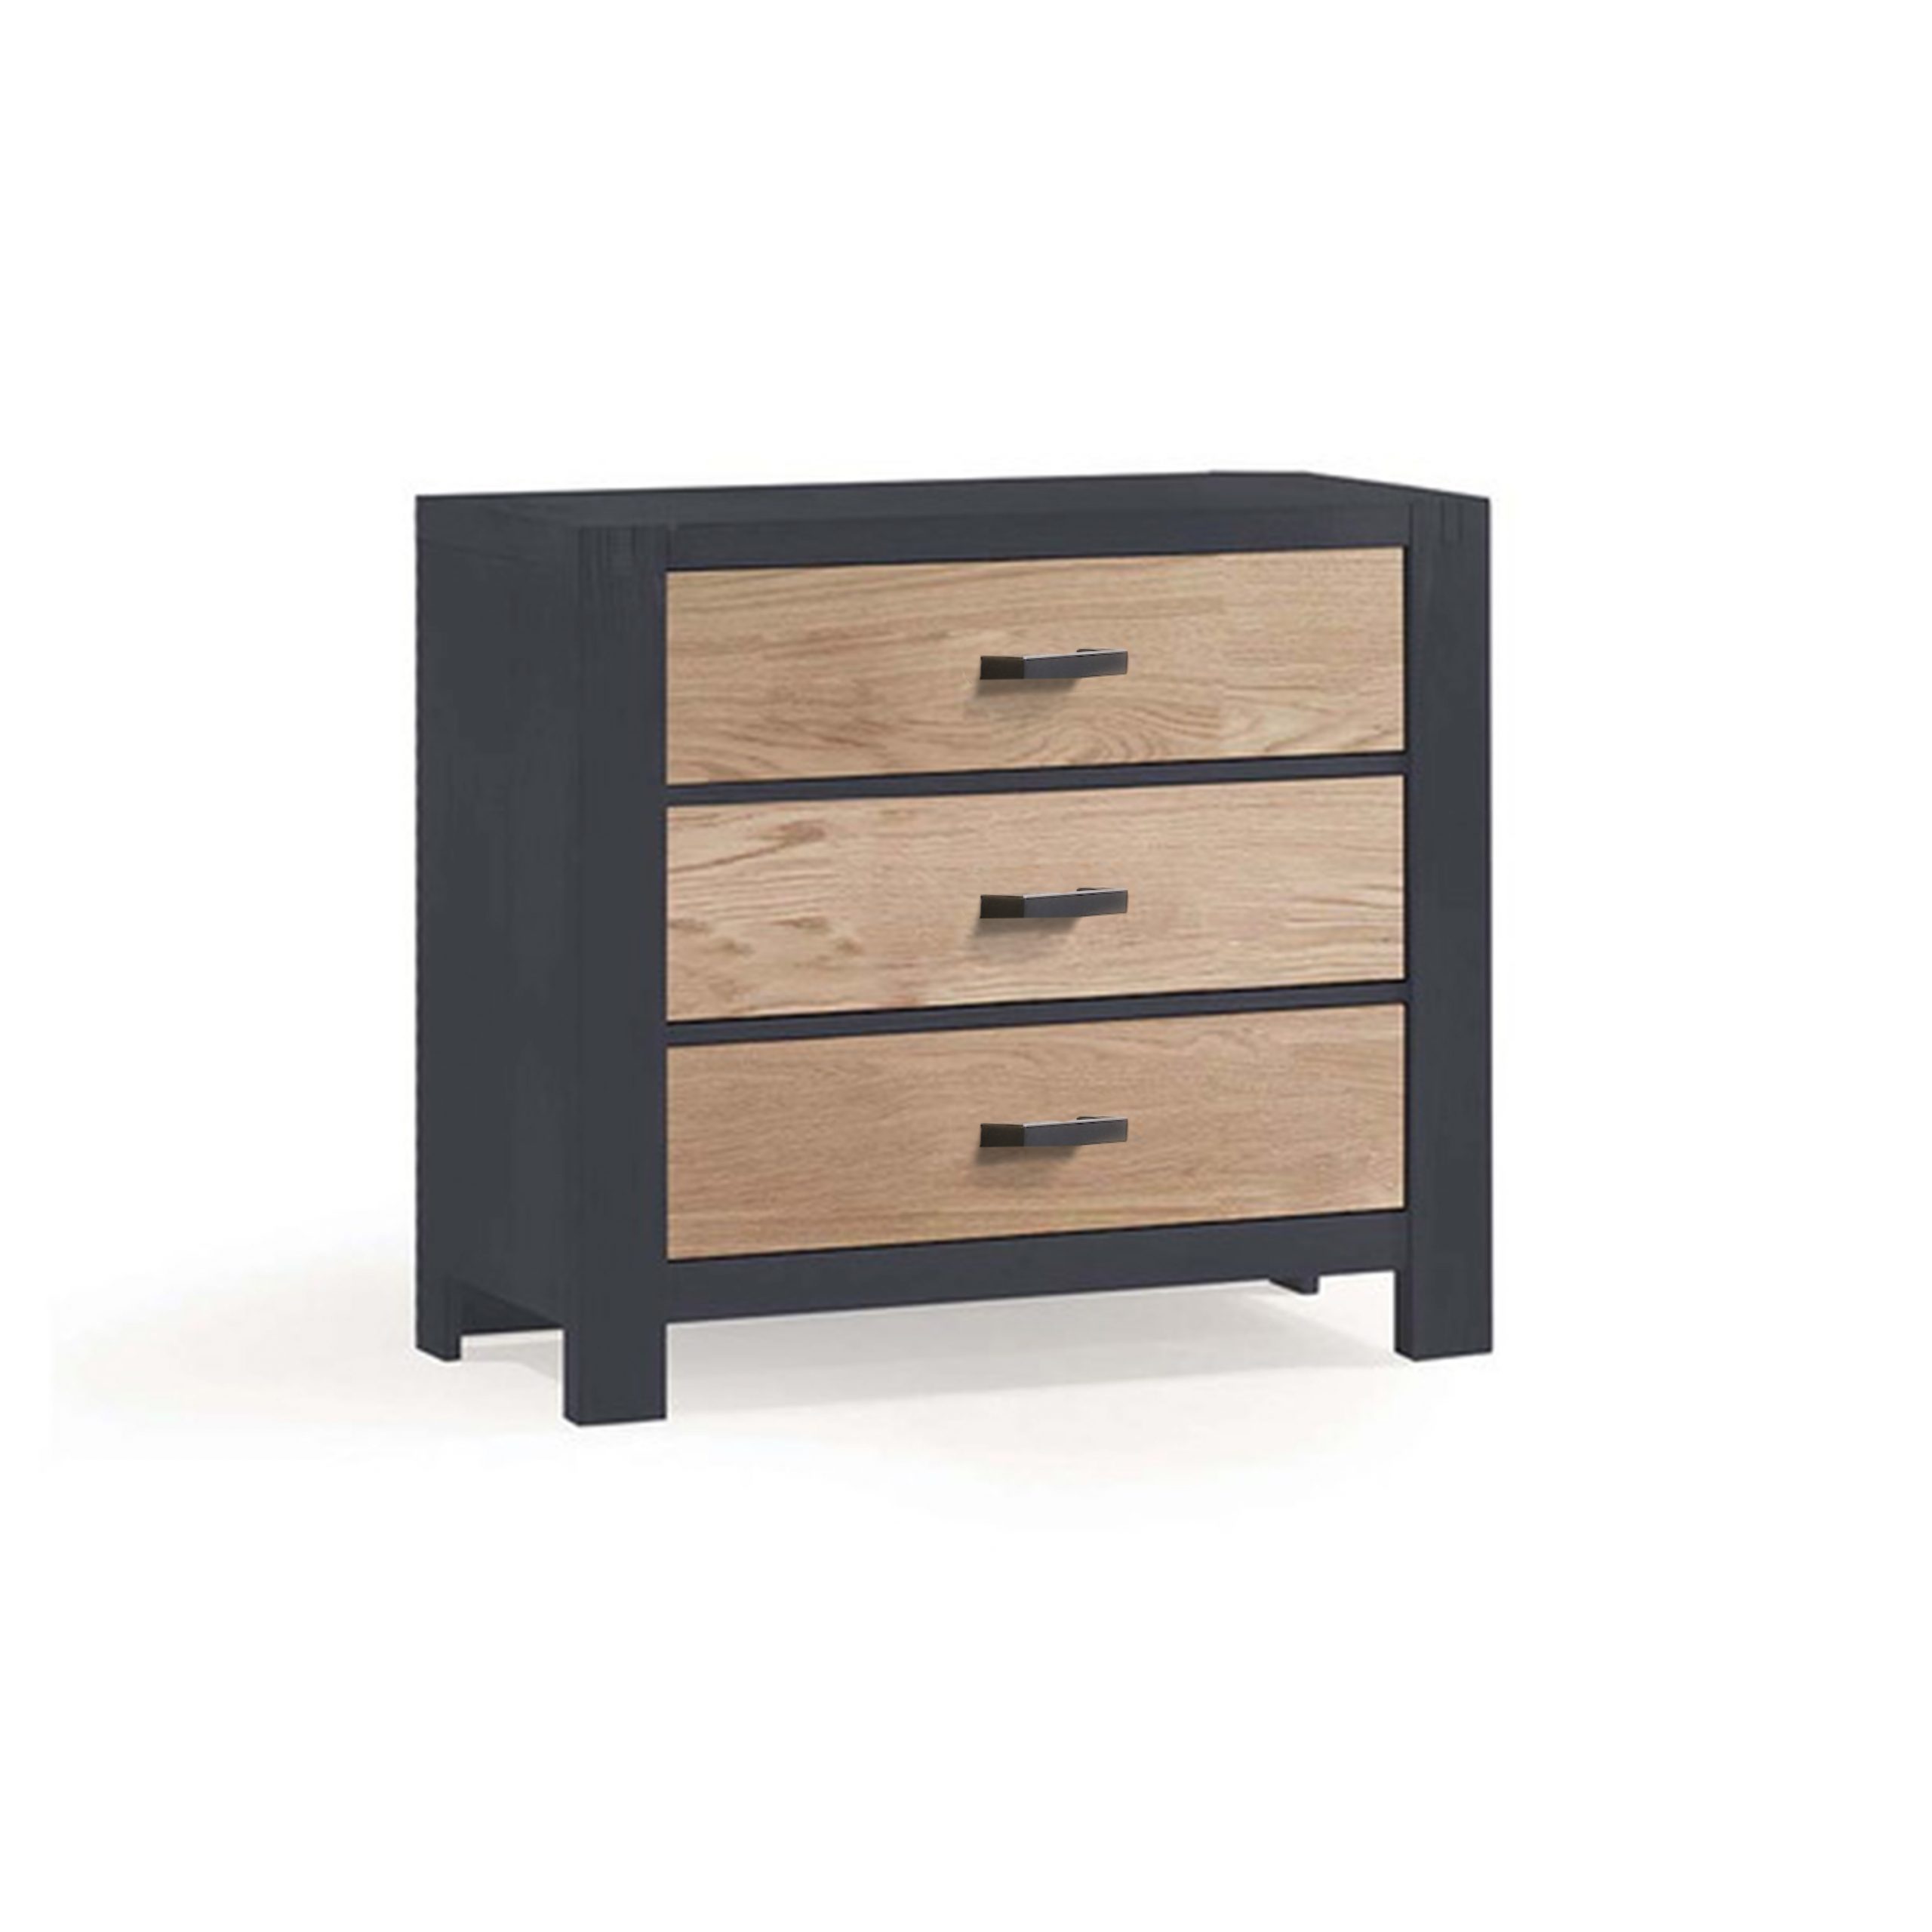 Rustico Moderno 3 Drawer Dresser in Graphite and Natural Oak